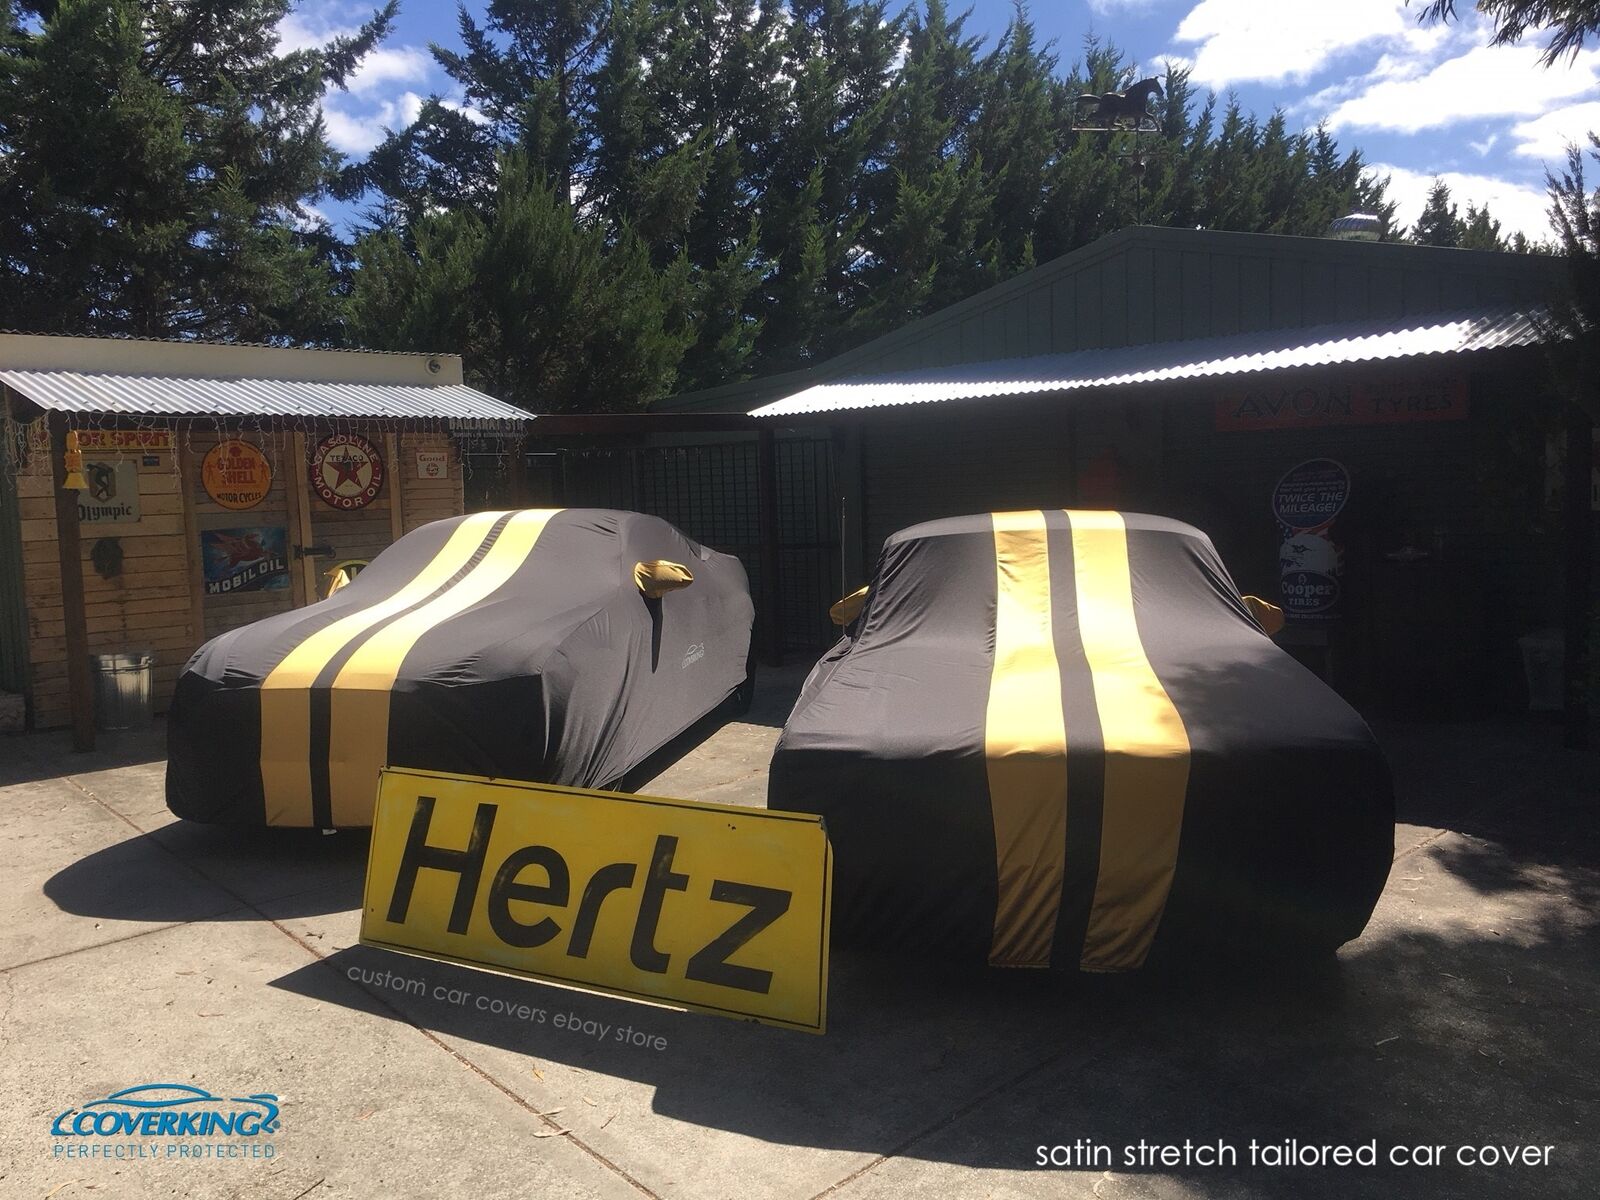 Coverking Satin Stretch Indoor Custom Car Cover for Ford Mustang Shelby Hertz